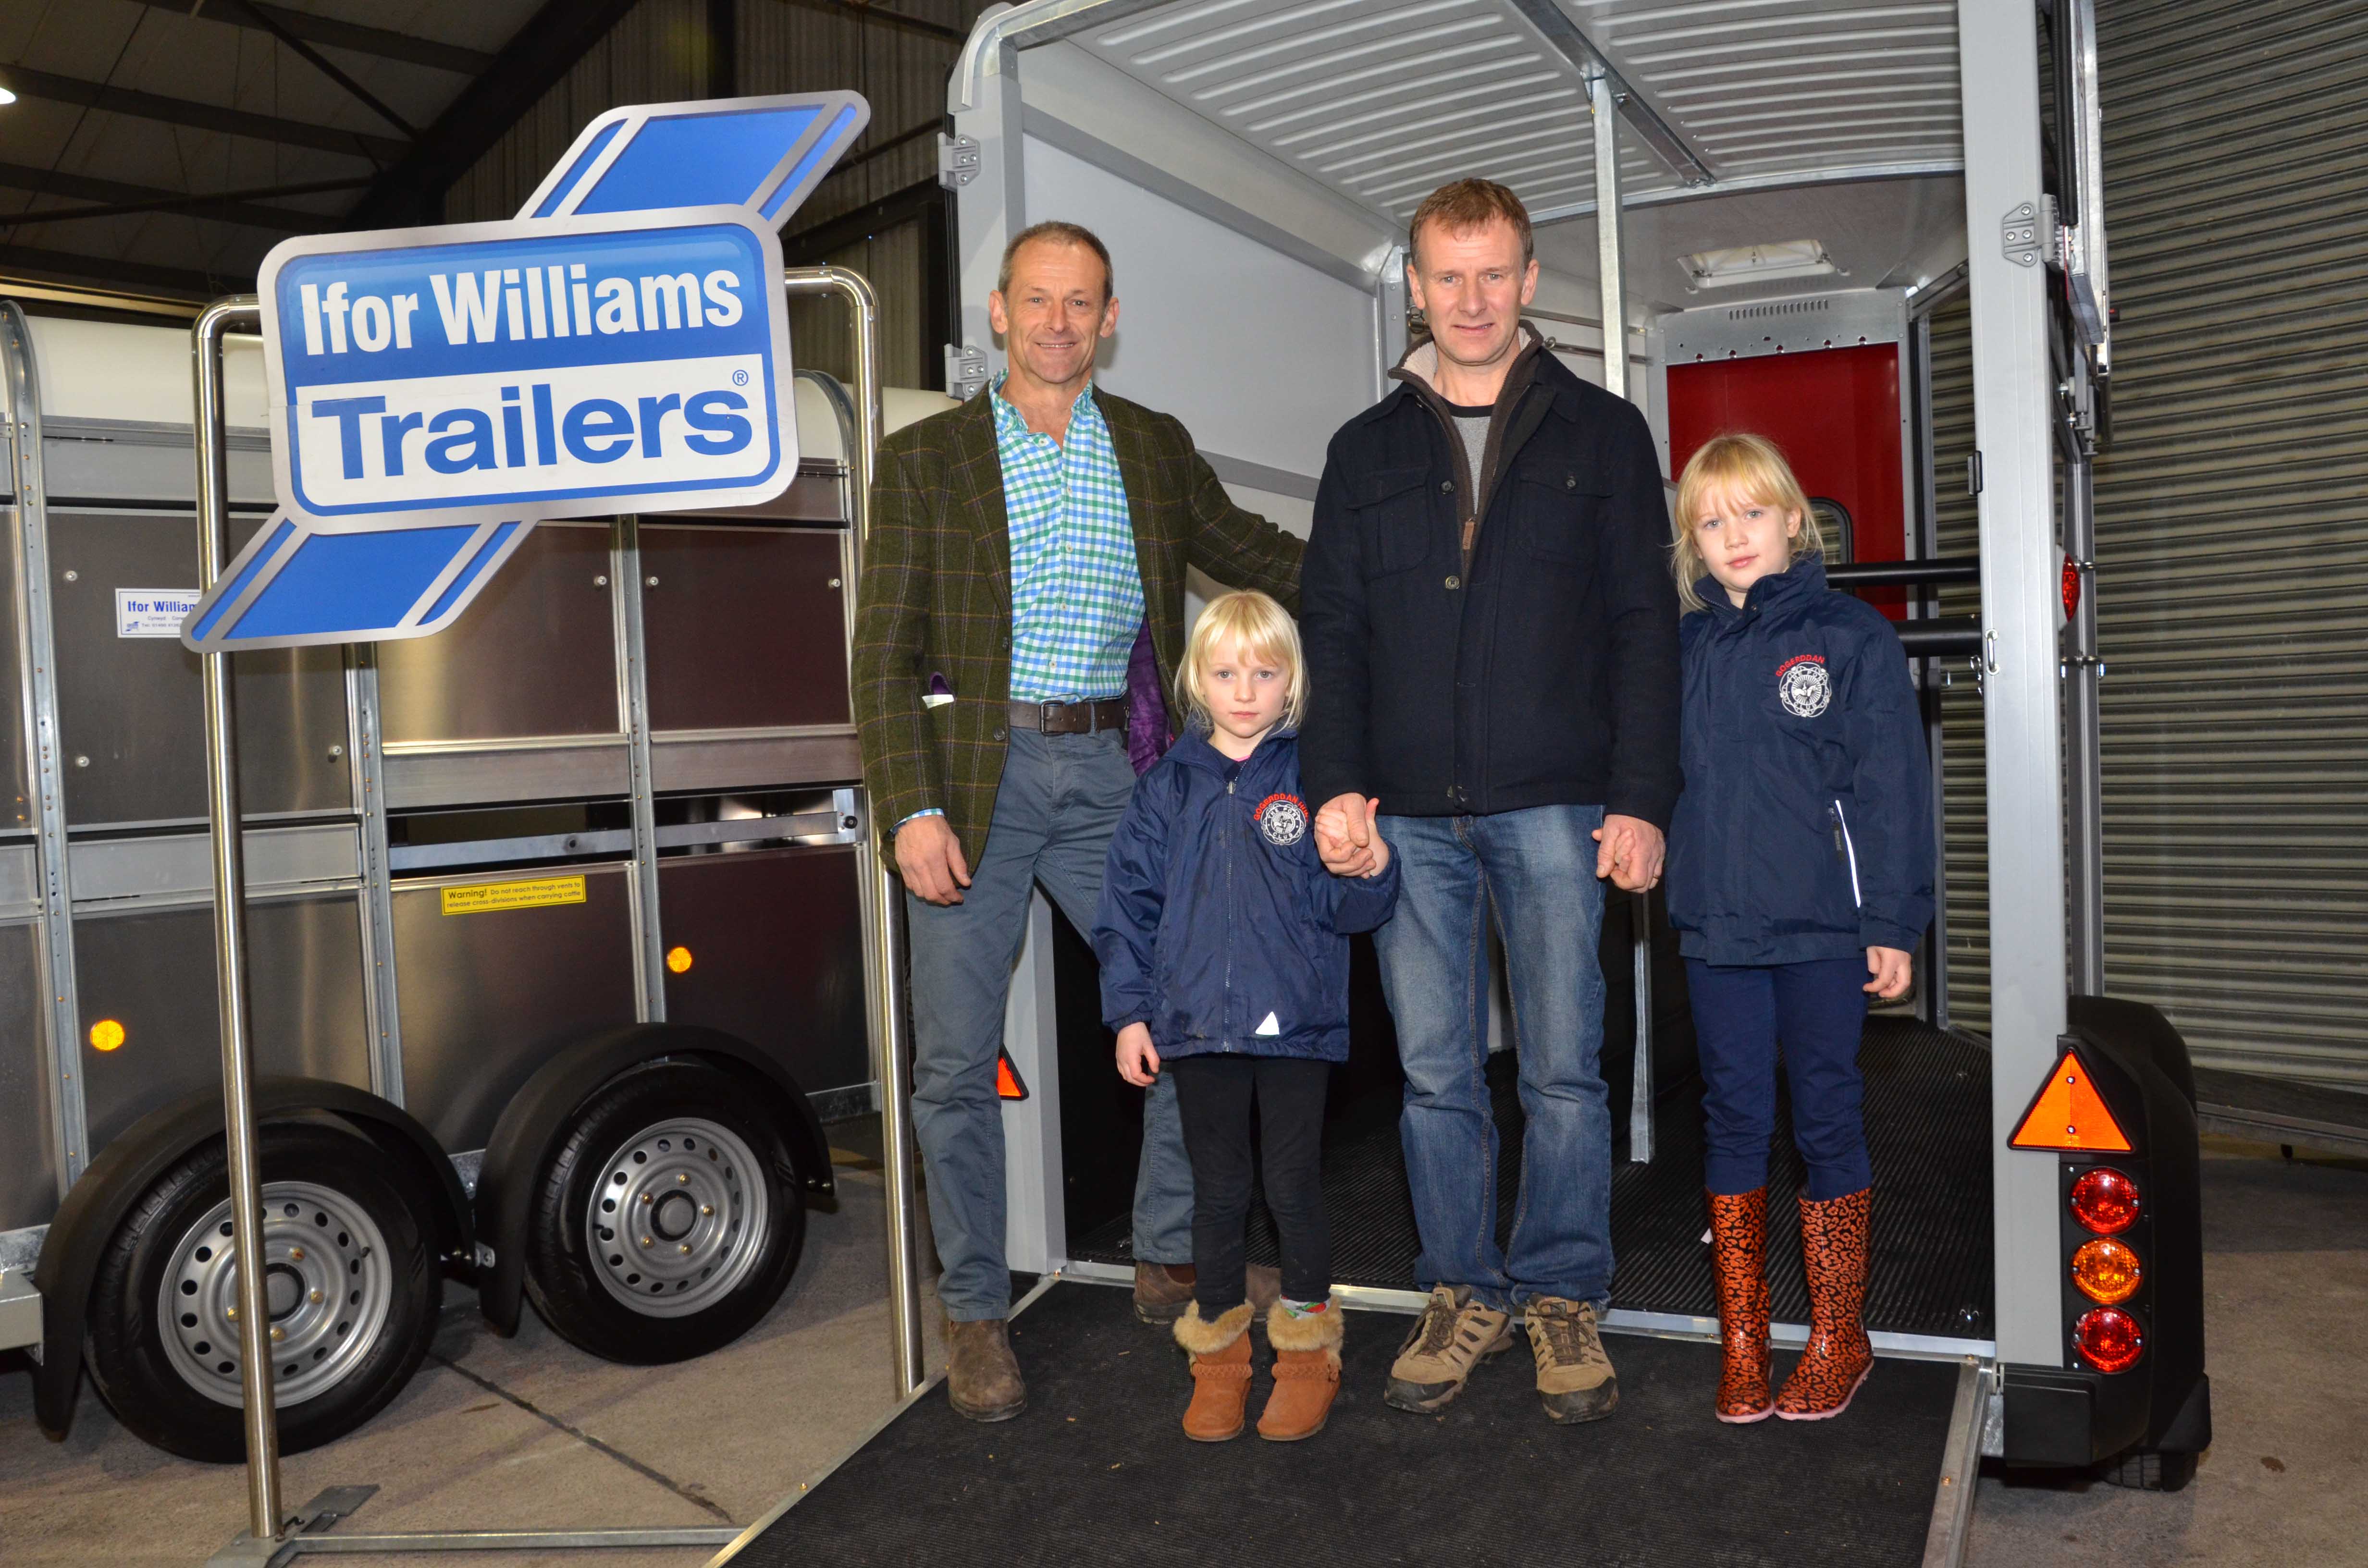 Aberystwyth farmers win trailer jackpot